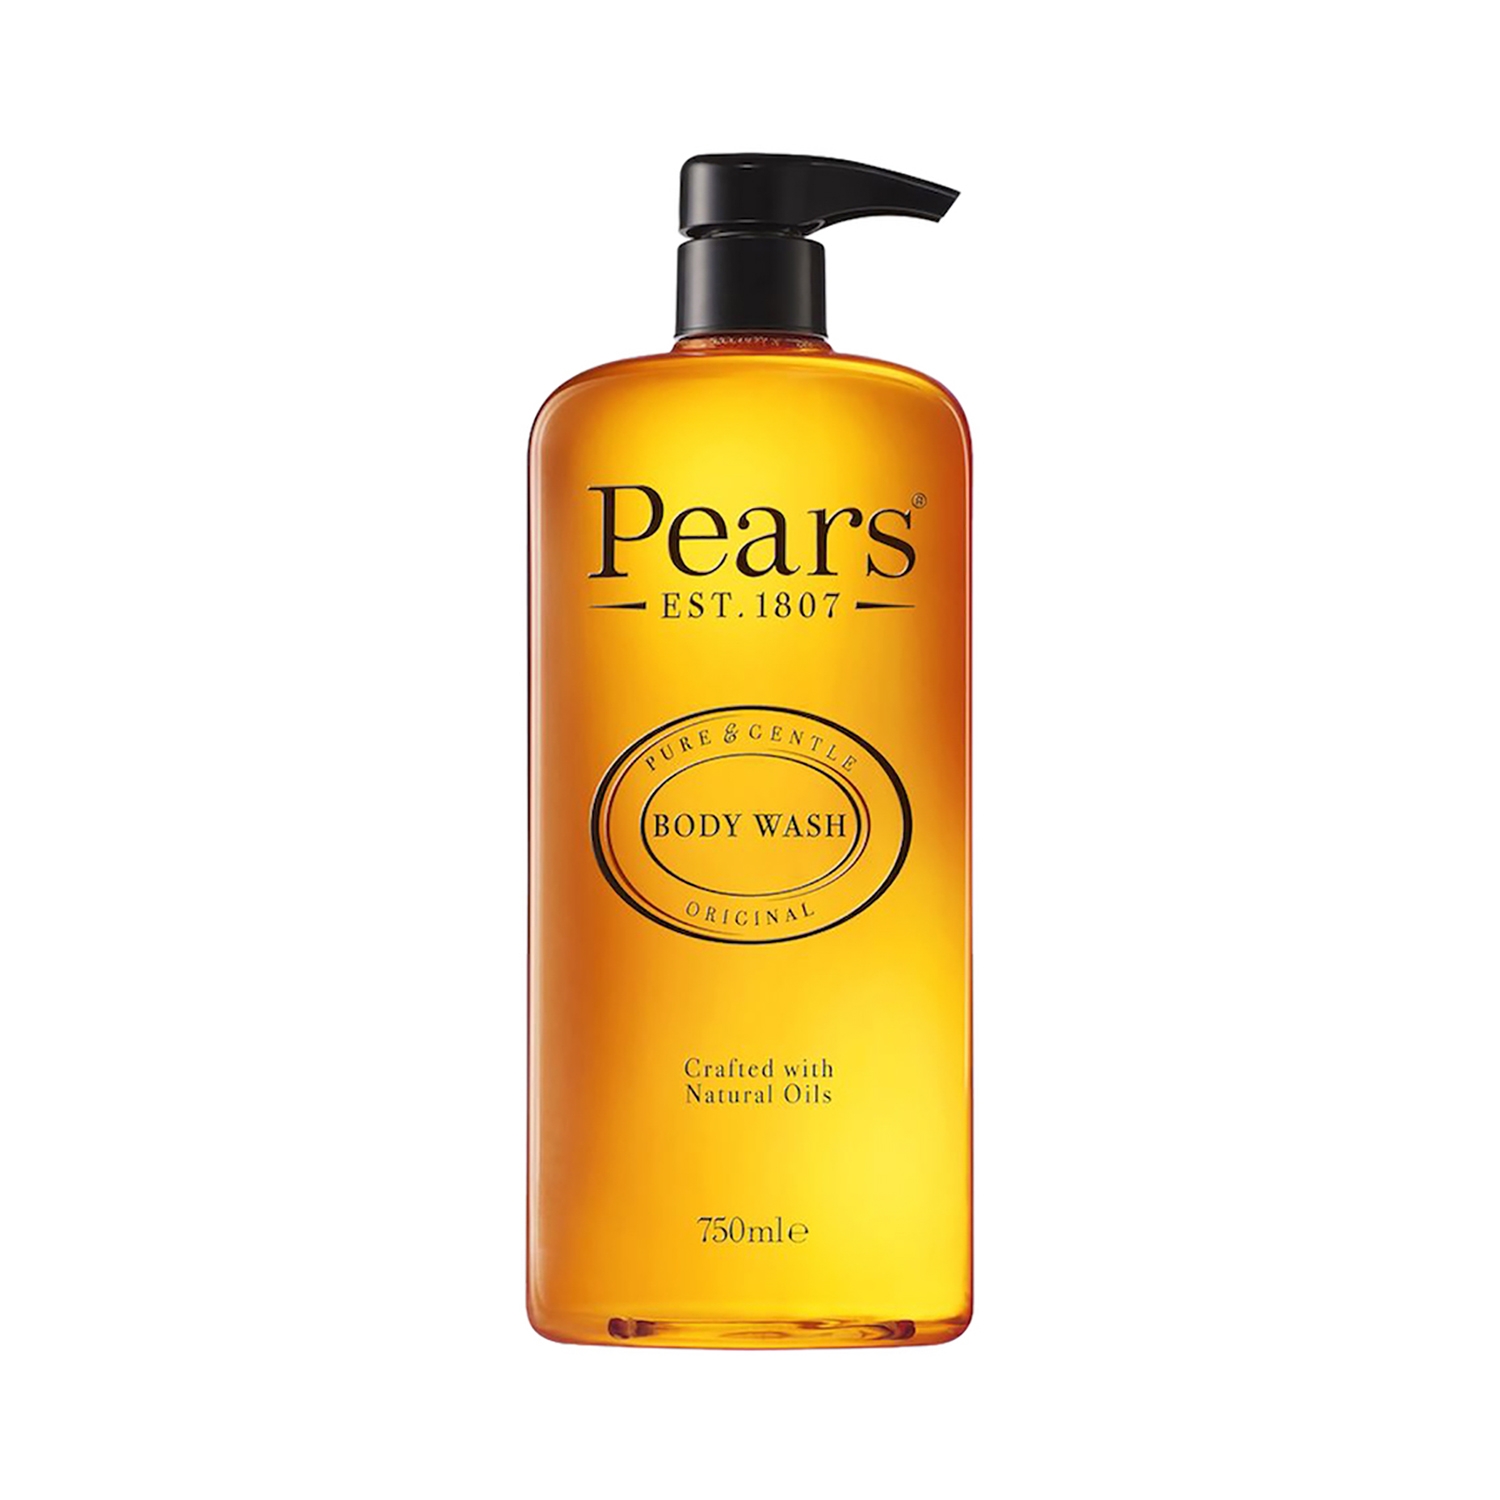 Pears Pure & Gentle Original Body Wash (750ml)